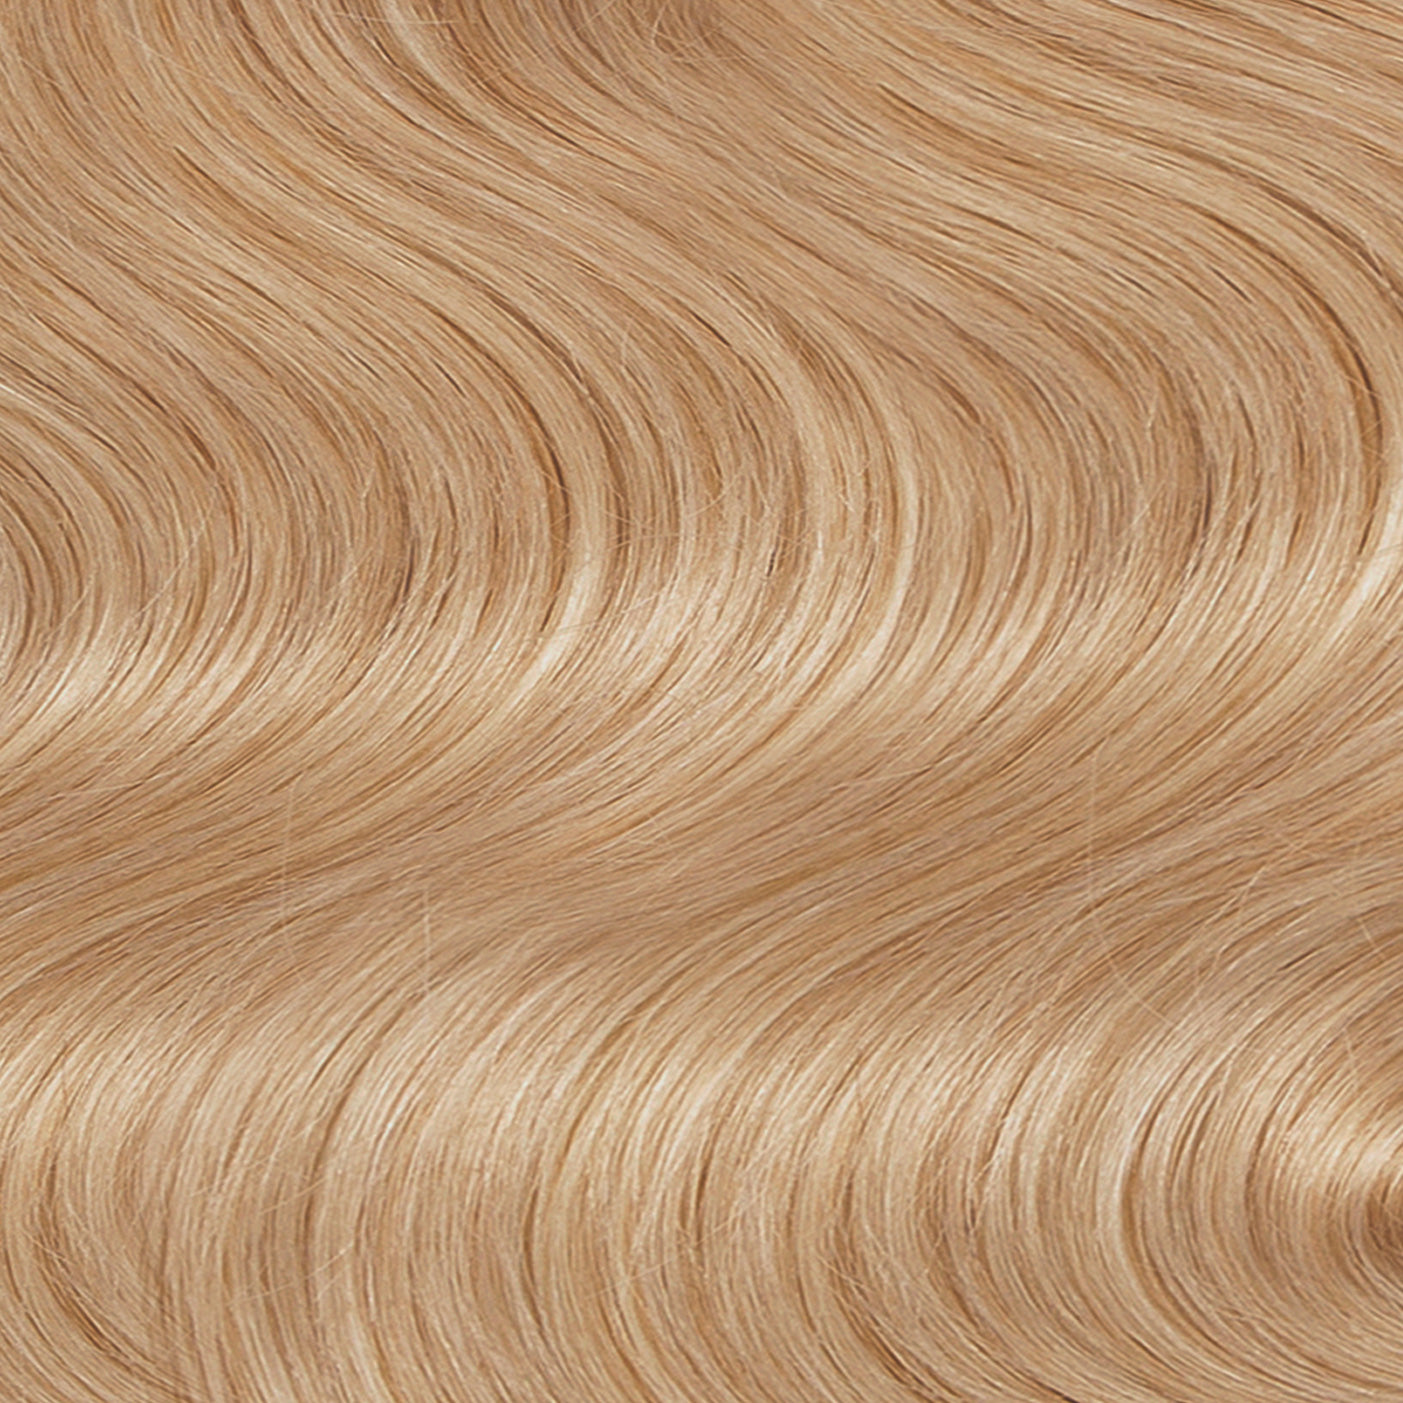 Keratin Bond Hair Extensions #18 Honey Blonde